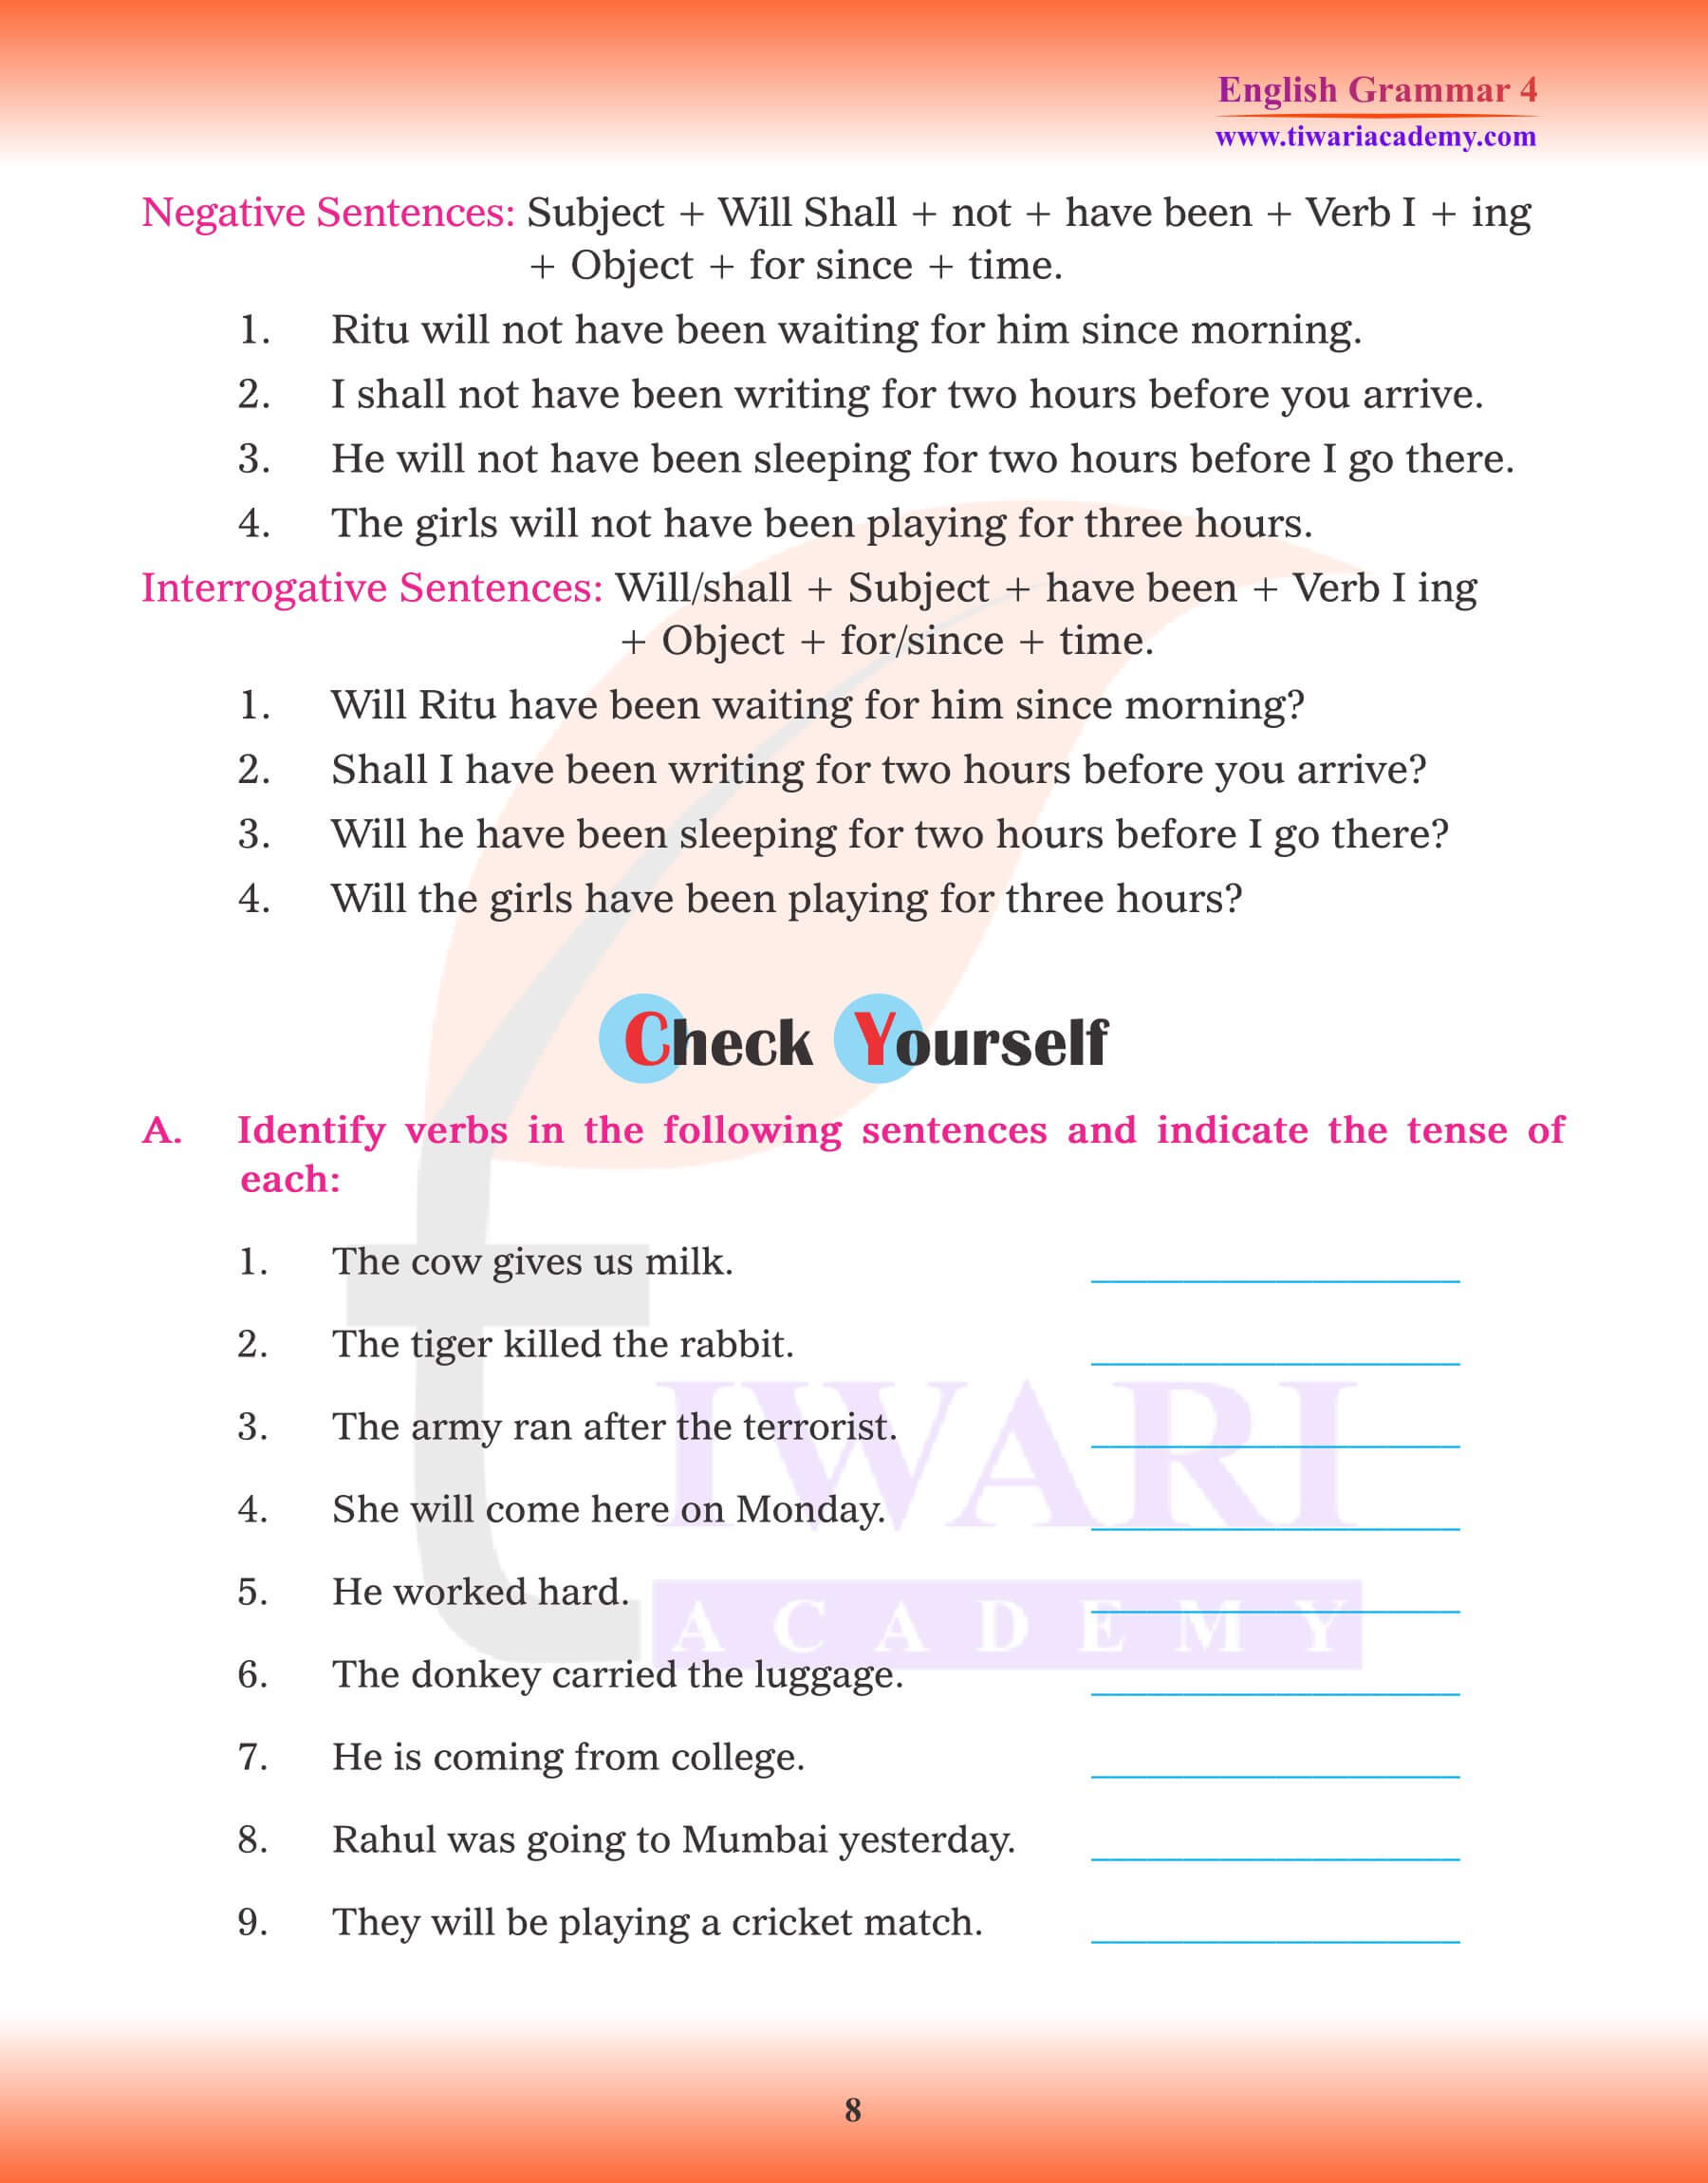 Class 4 English Grammar Tense Exercises